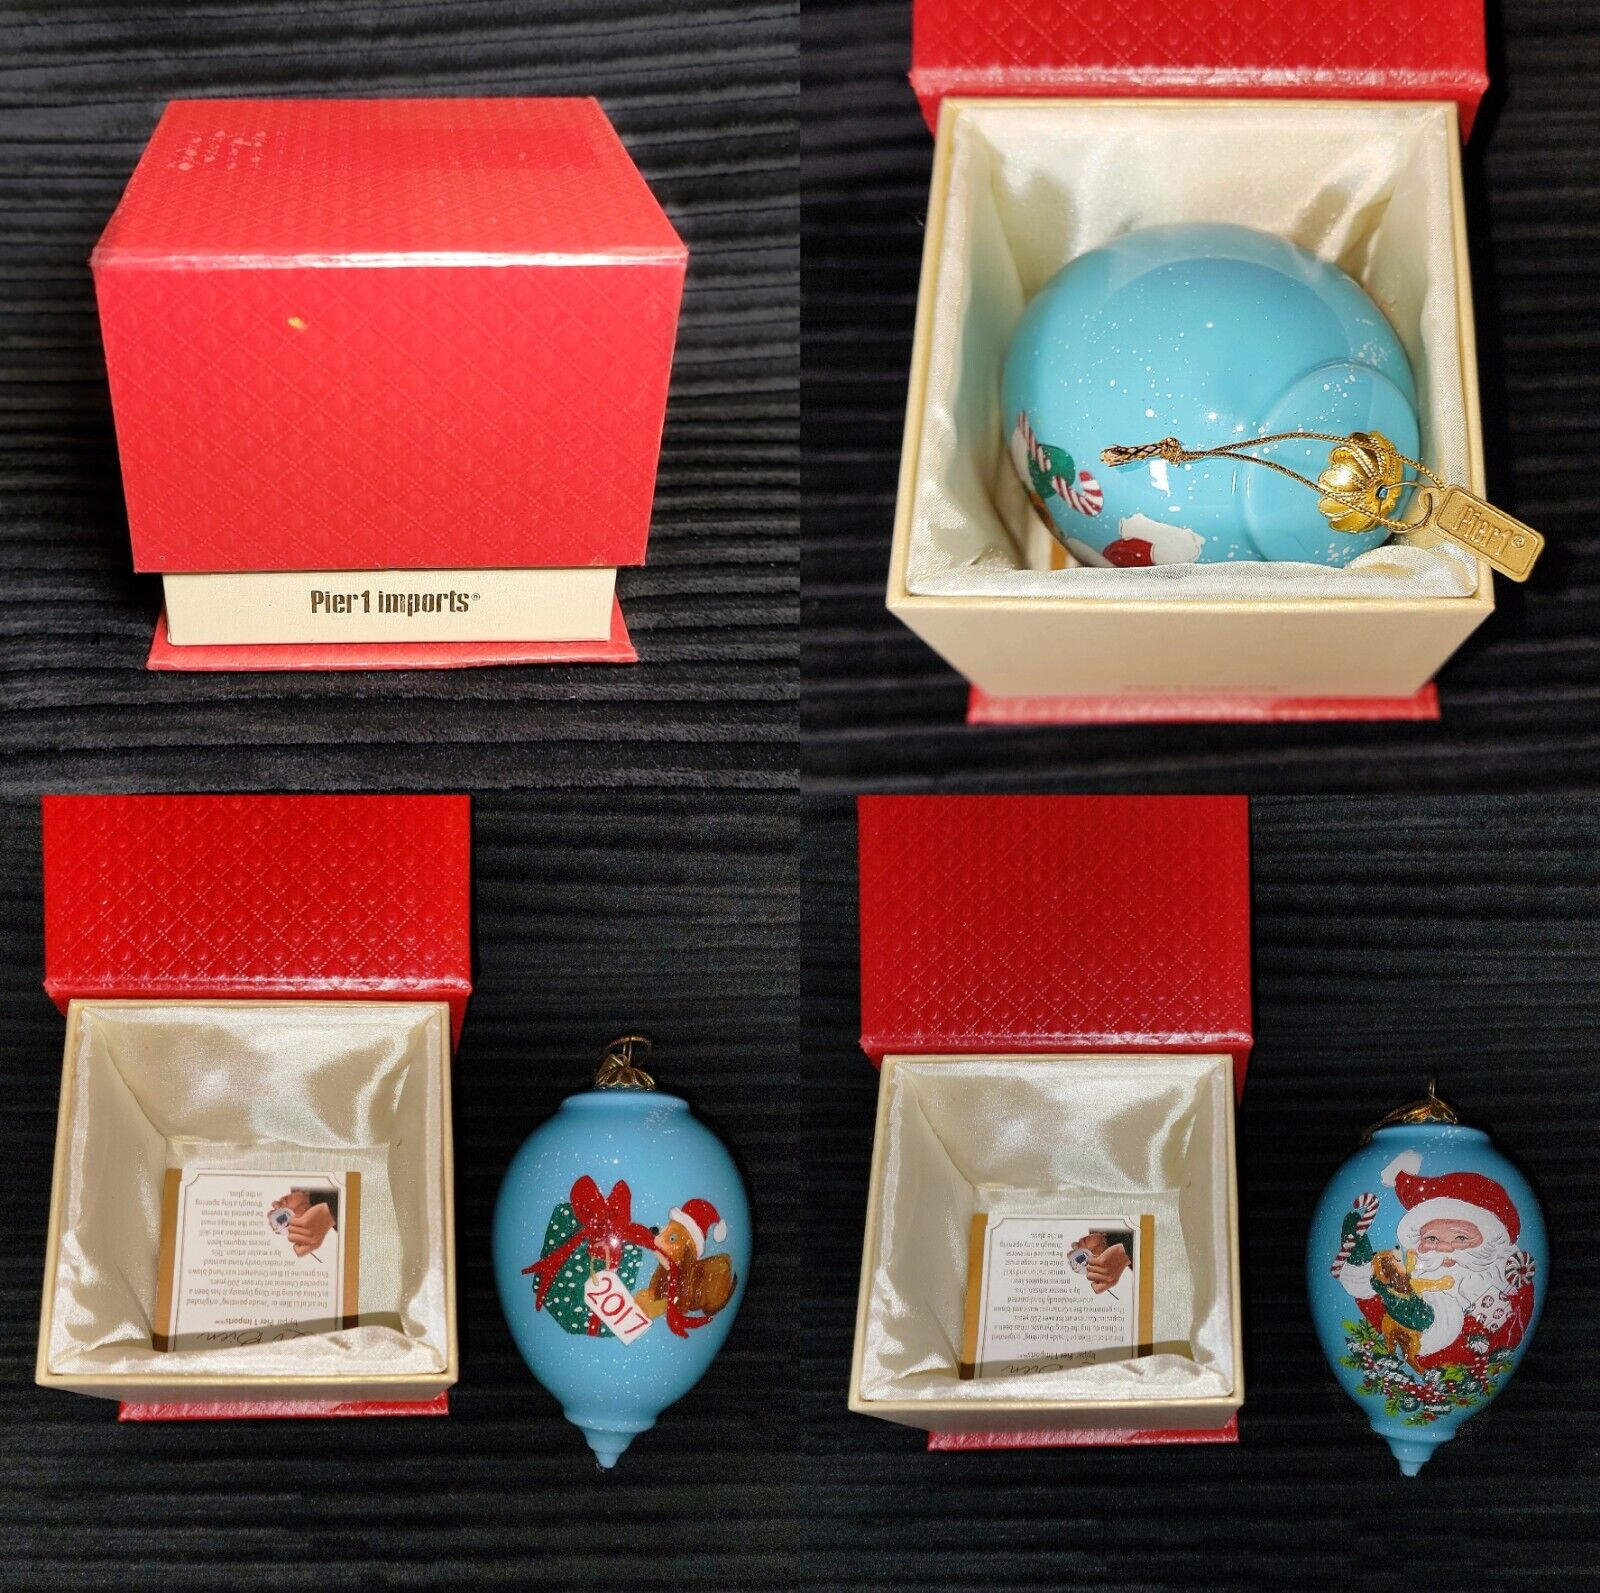 2017 Pier 1 Imports  Li Bien Painted Christmas Ornament - Santa & Dog New In Box